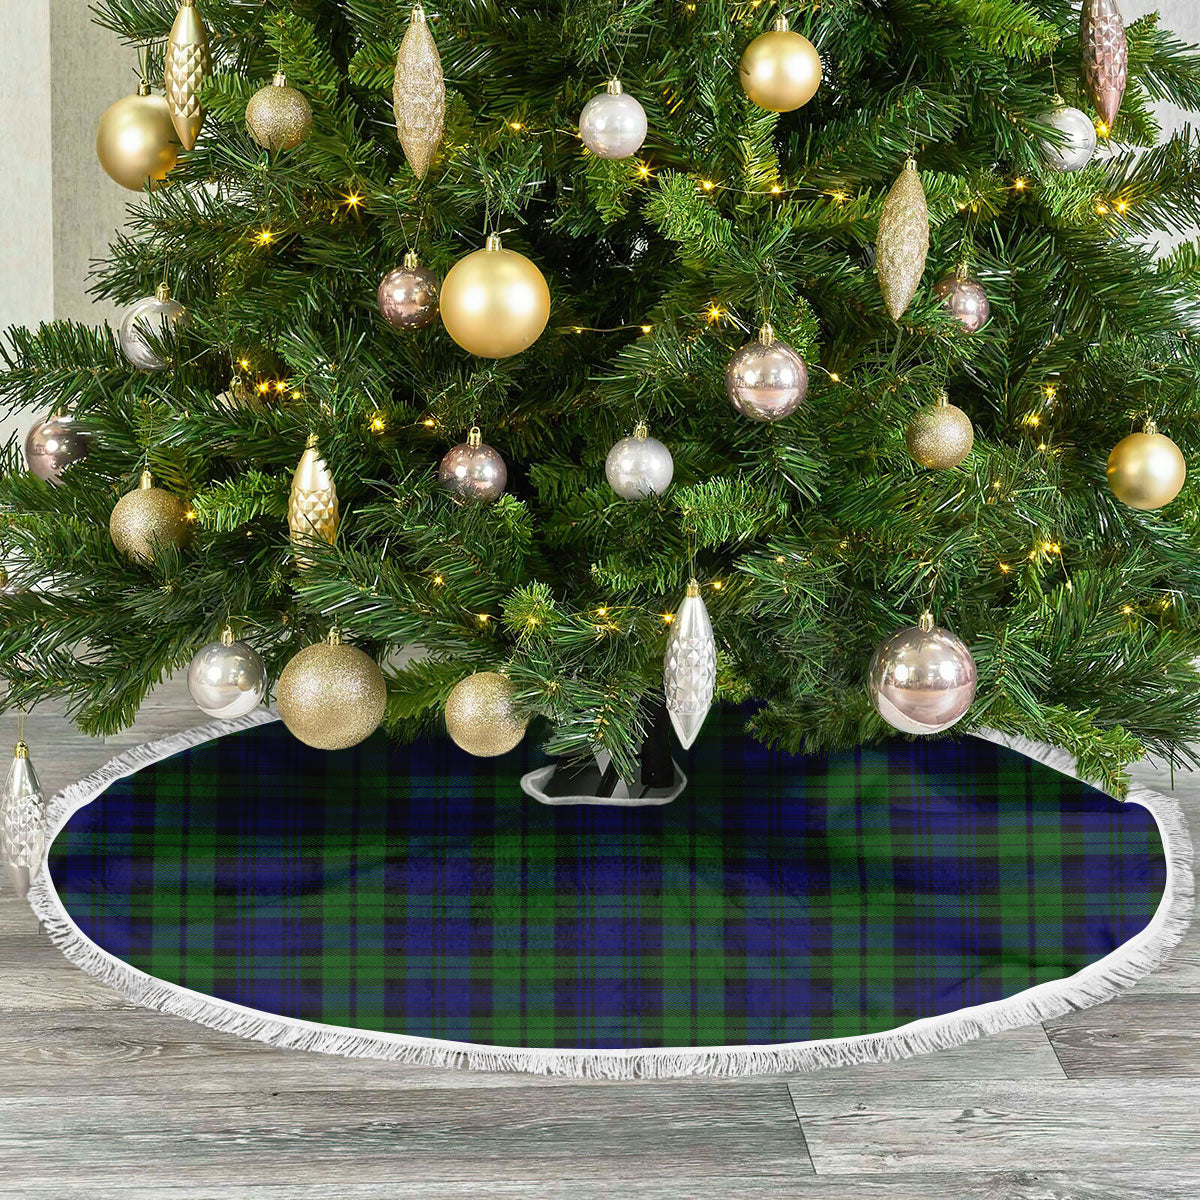 Bannatyne Tartan Christmas Tree Skirt